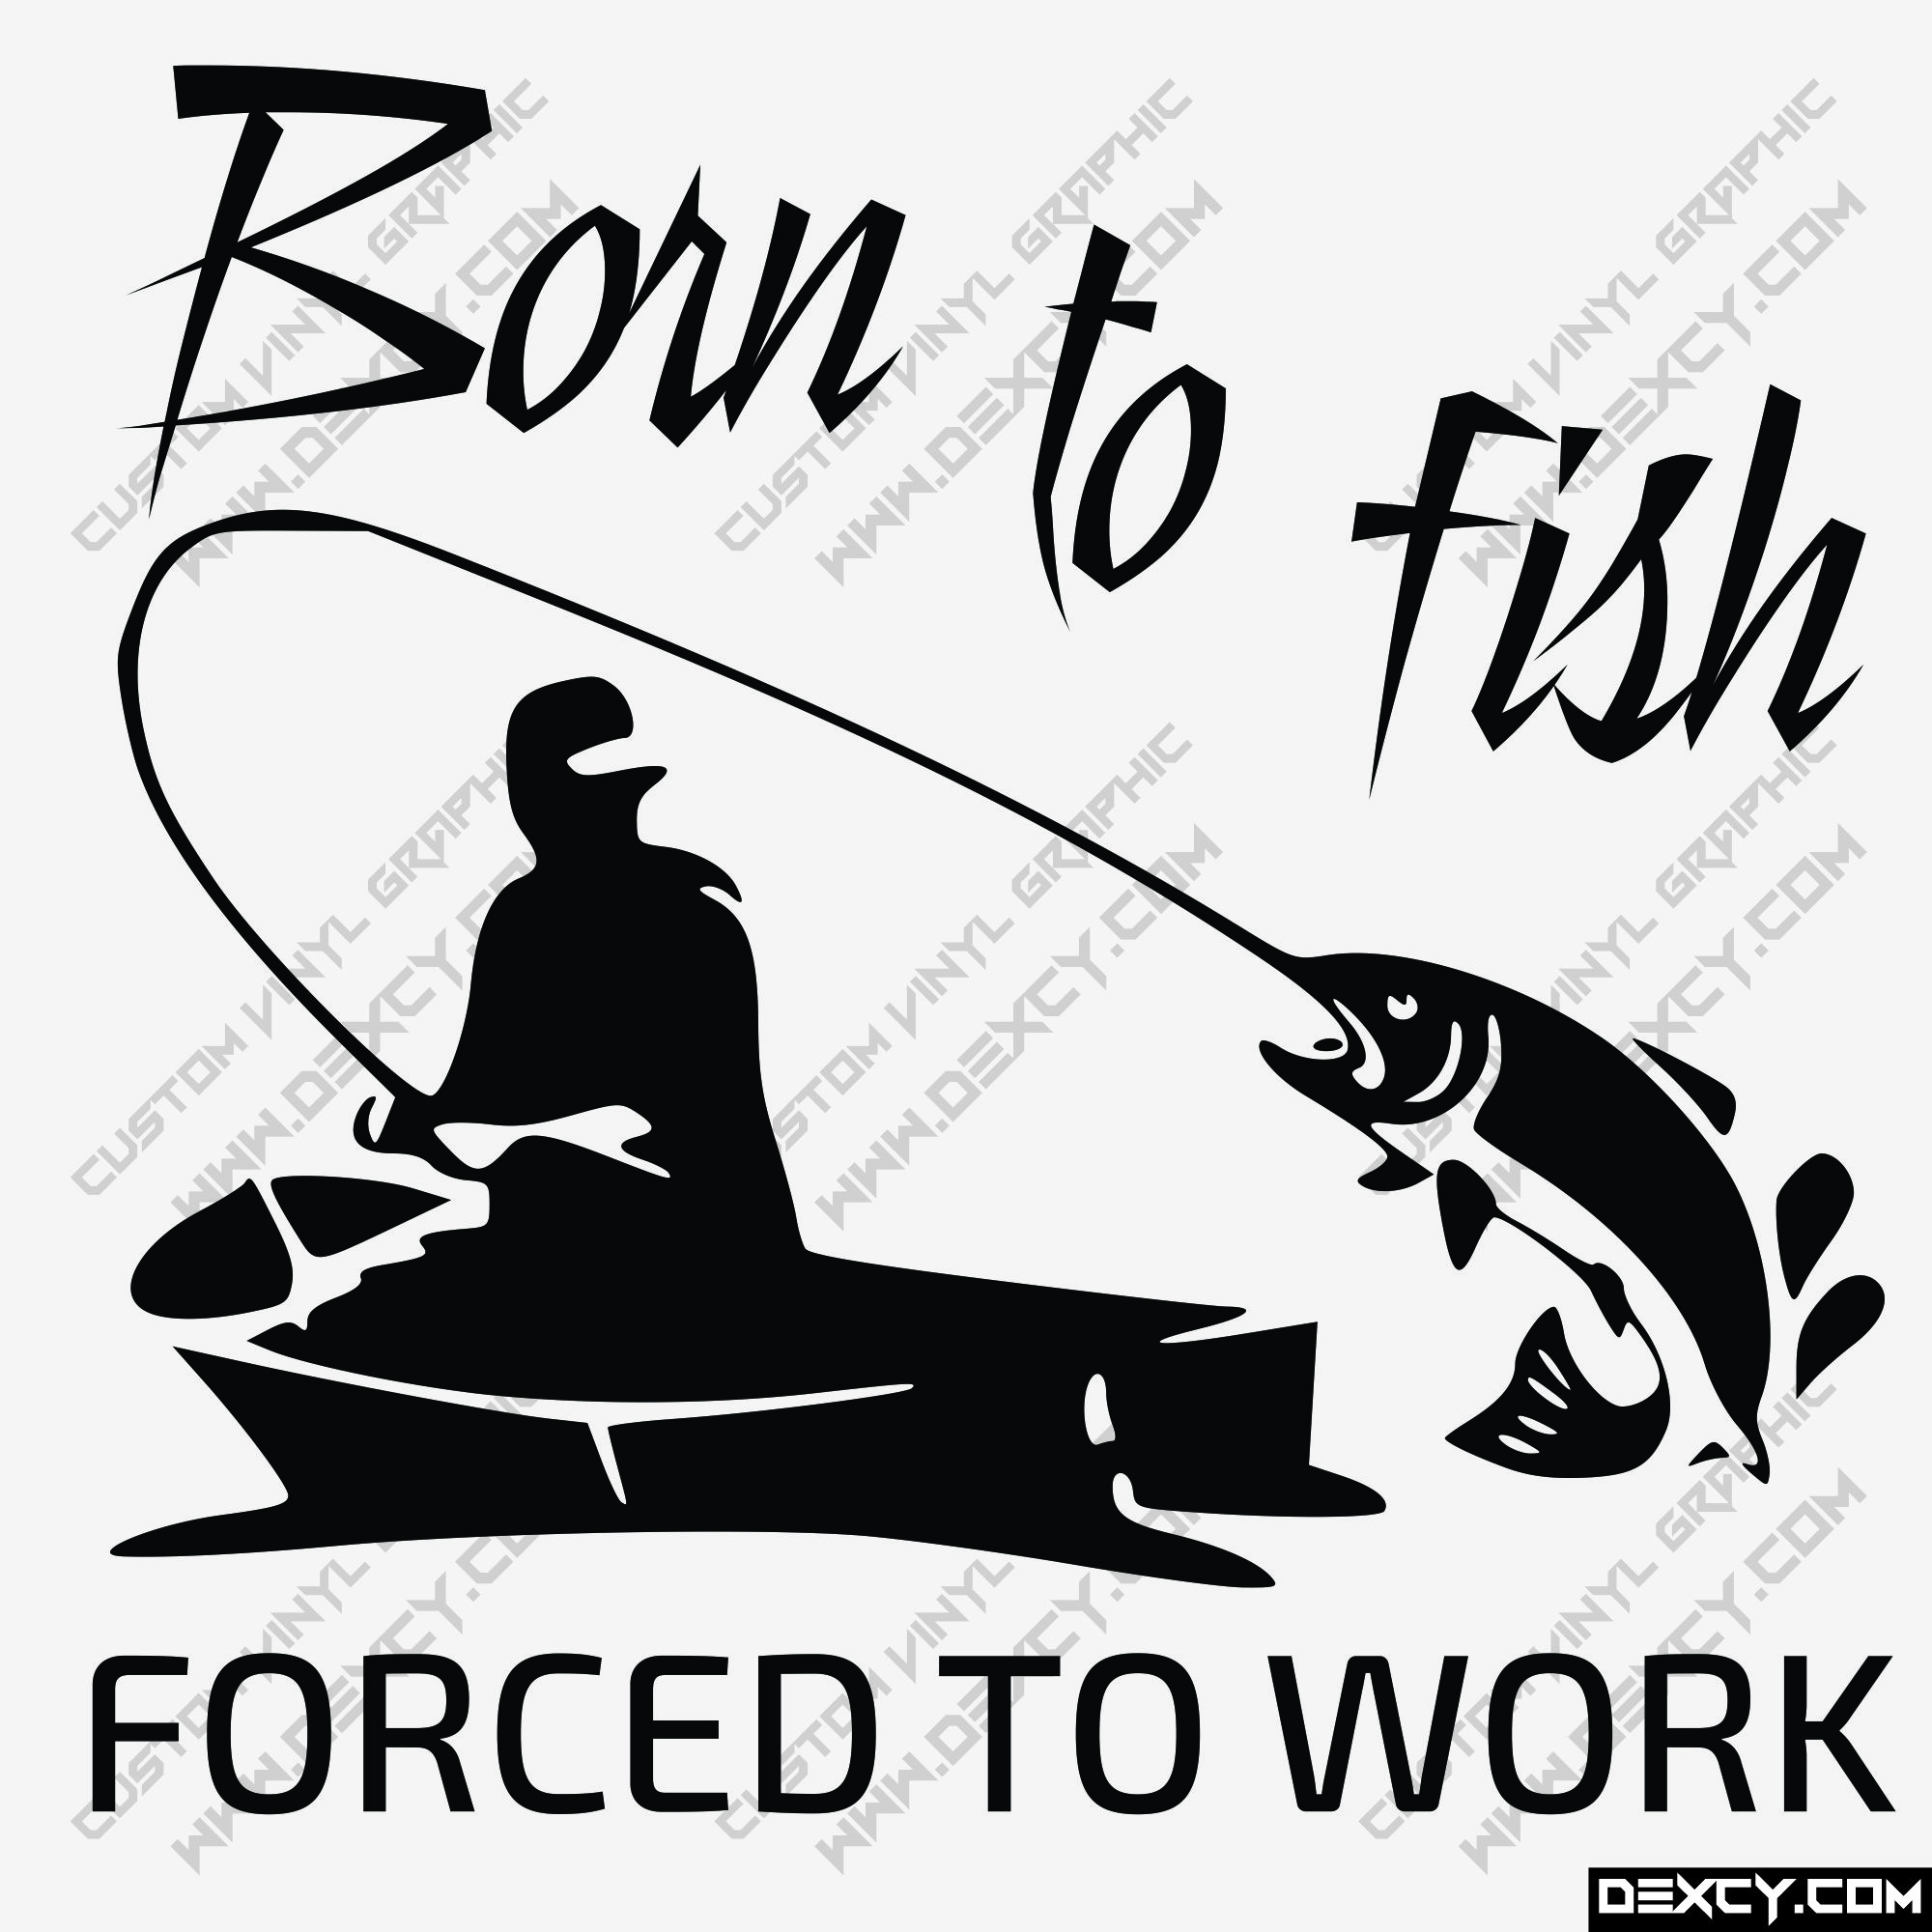 Born To Fish Forced To Work Car Van Window Bumper Vinyl Decal Transfer Sticker